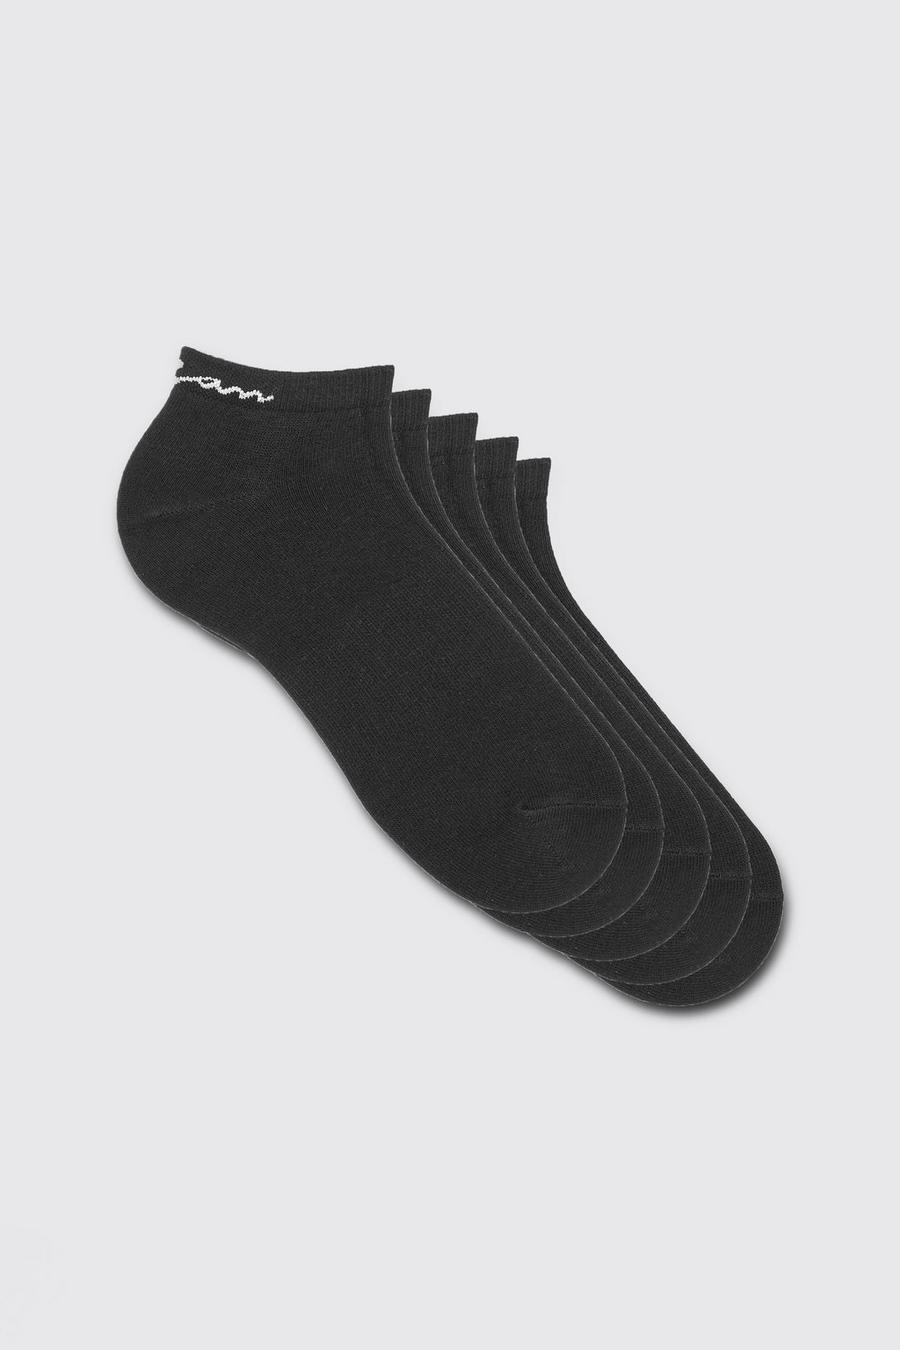 Pack de 5 pares de calcetines deportivos con firma MAN, Black image number 1